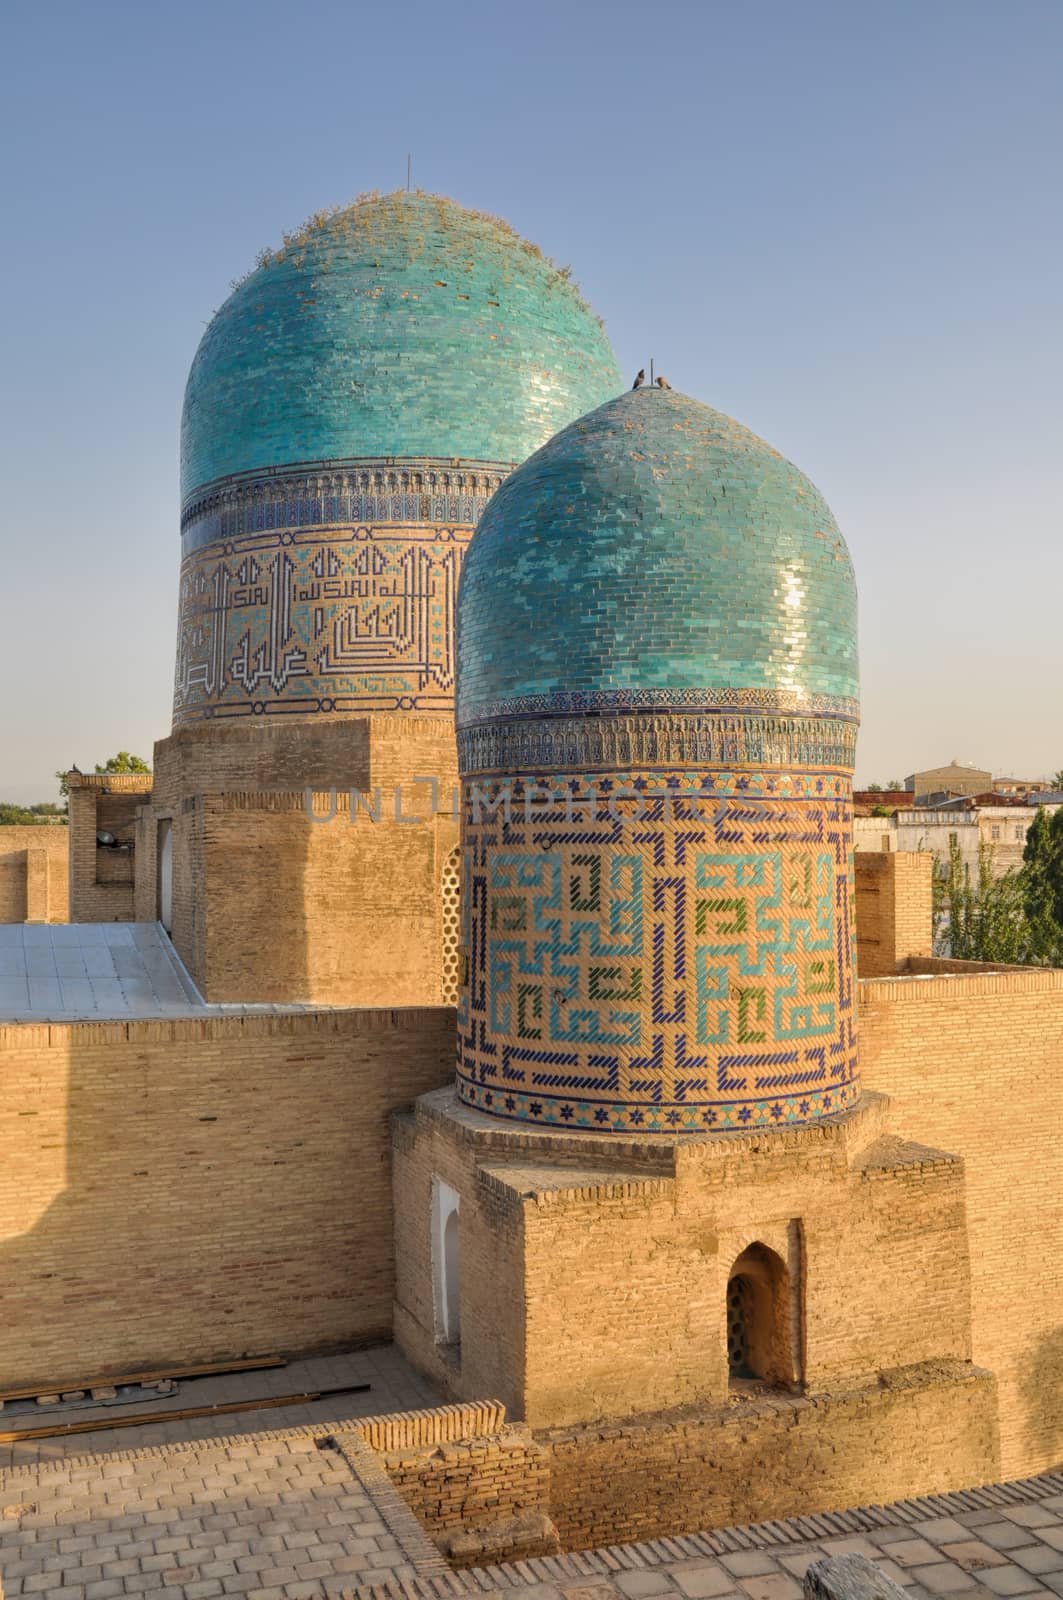 Beautifully decorated domes in city of Samarkand, Uzbekistan